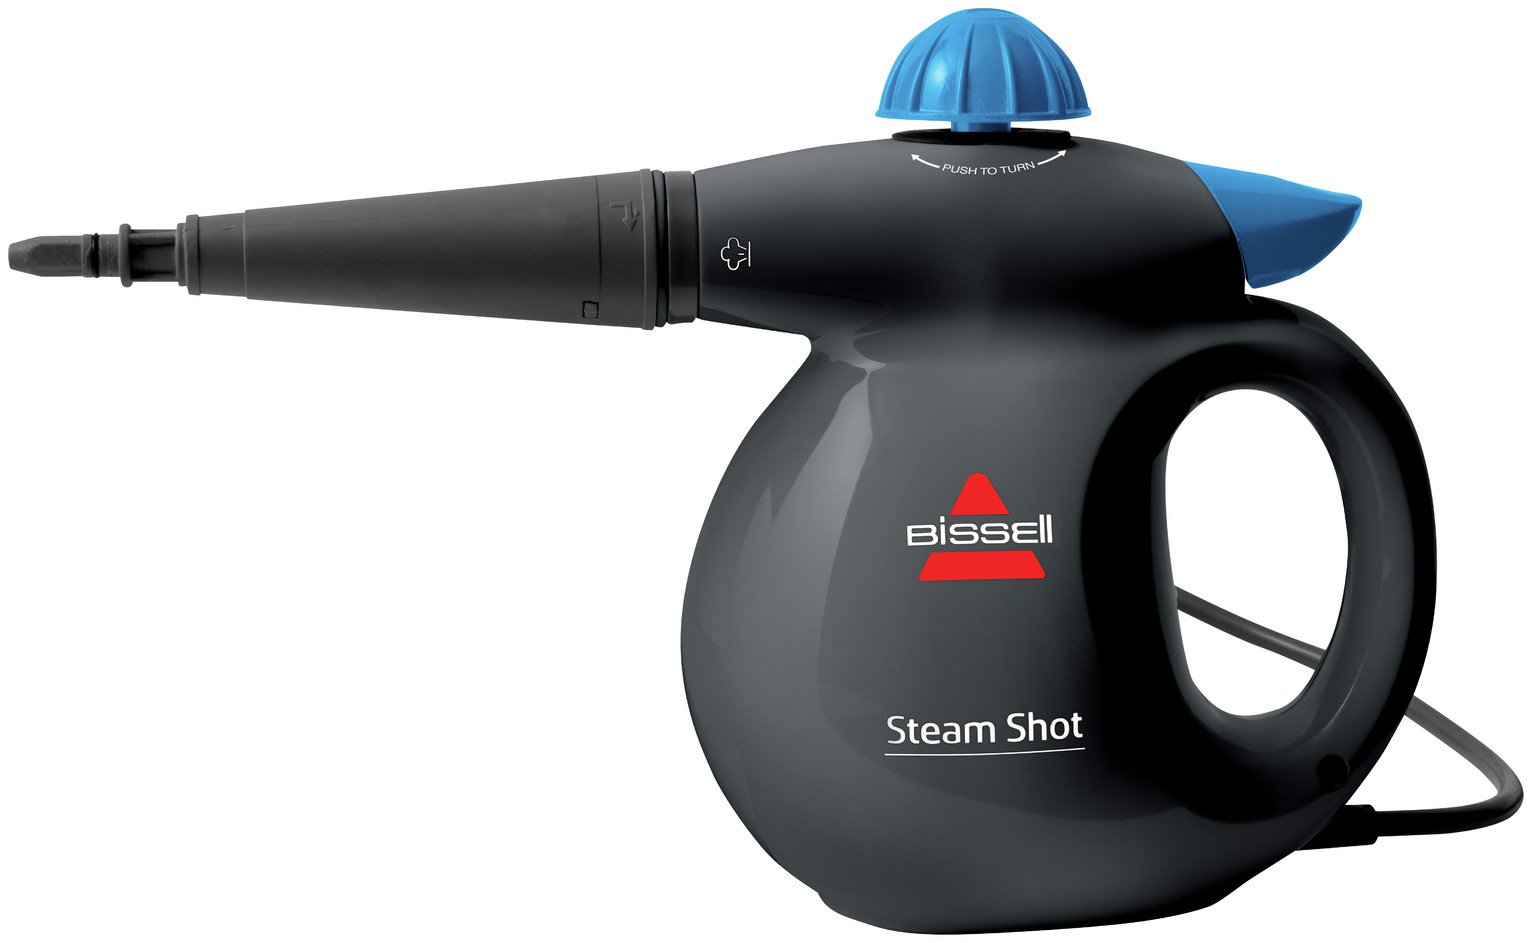 Bissell SteamShot Steam Cleaner